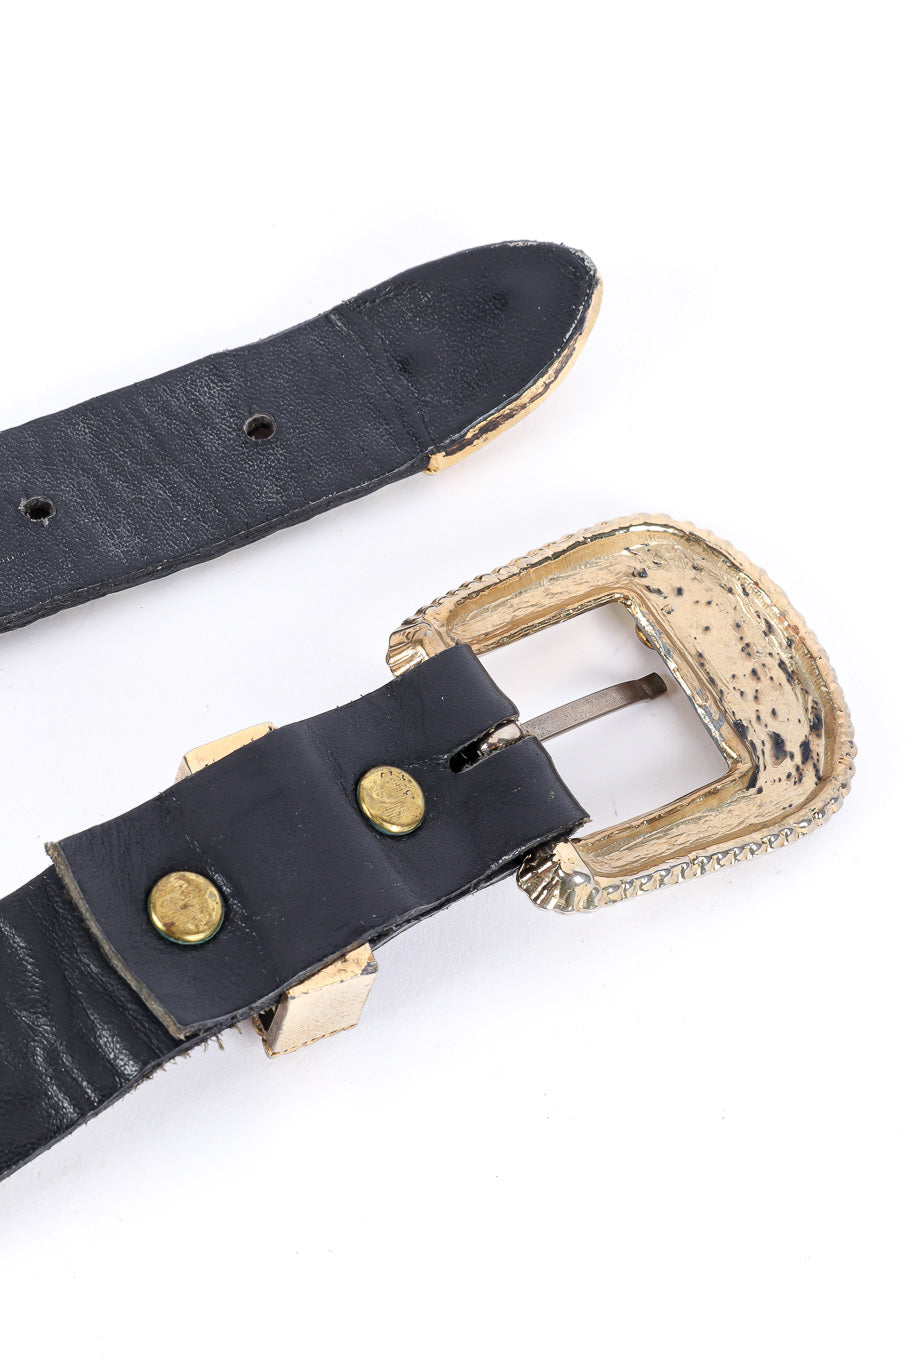 Crystal studded belt inside of buckle and end tab @recessla